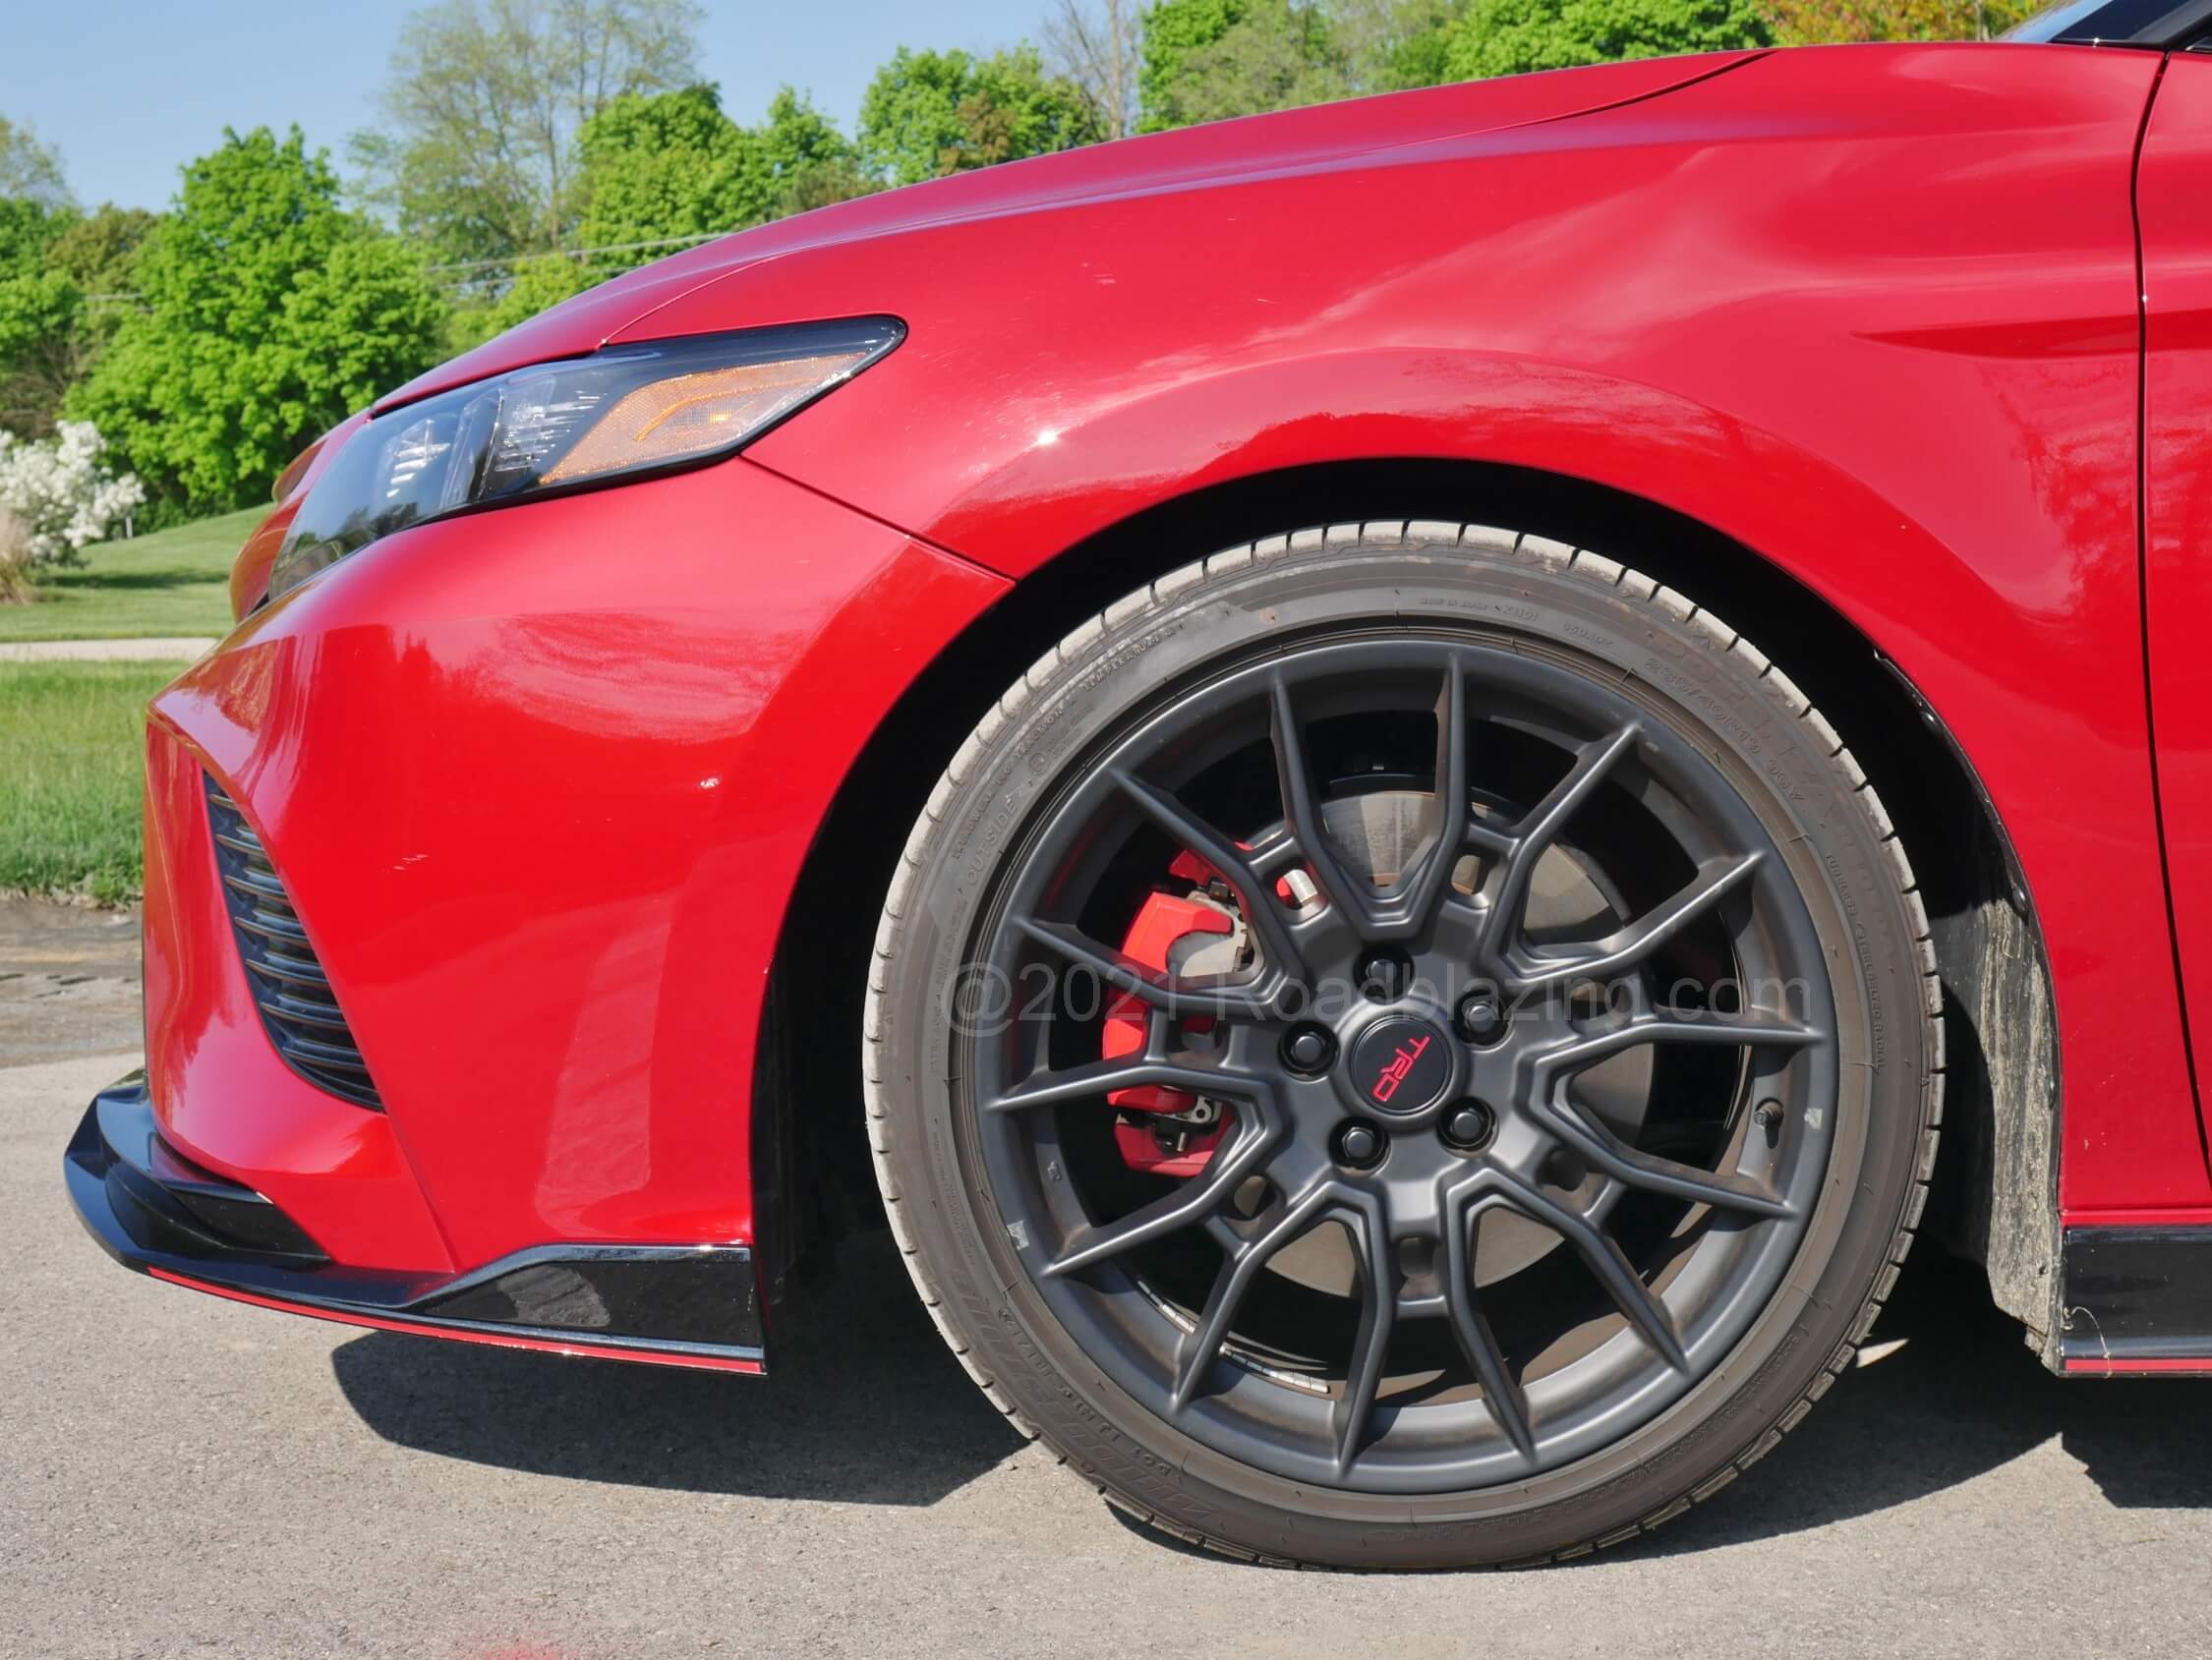 2022 Toyota Camry TRD: dealer available Bridgestone Potenza RE 050A summer tire option on lightweight TRD 19" wheels